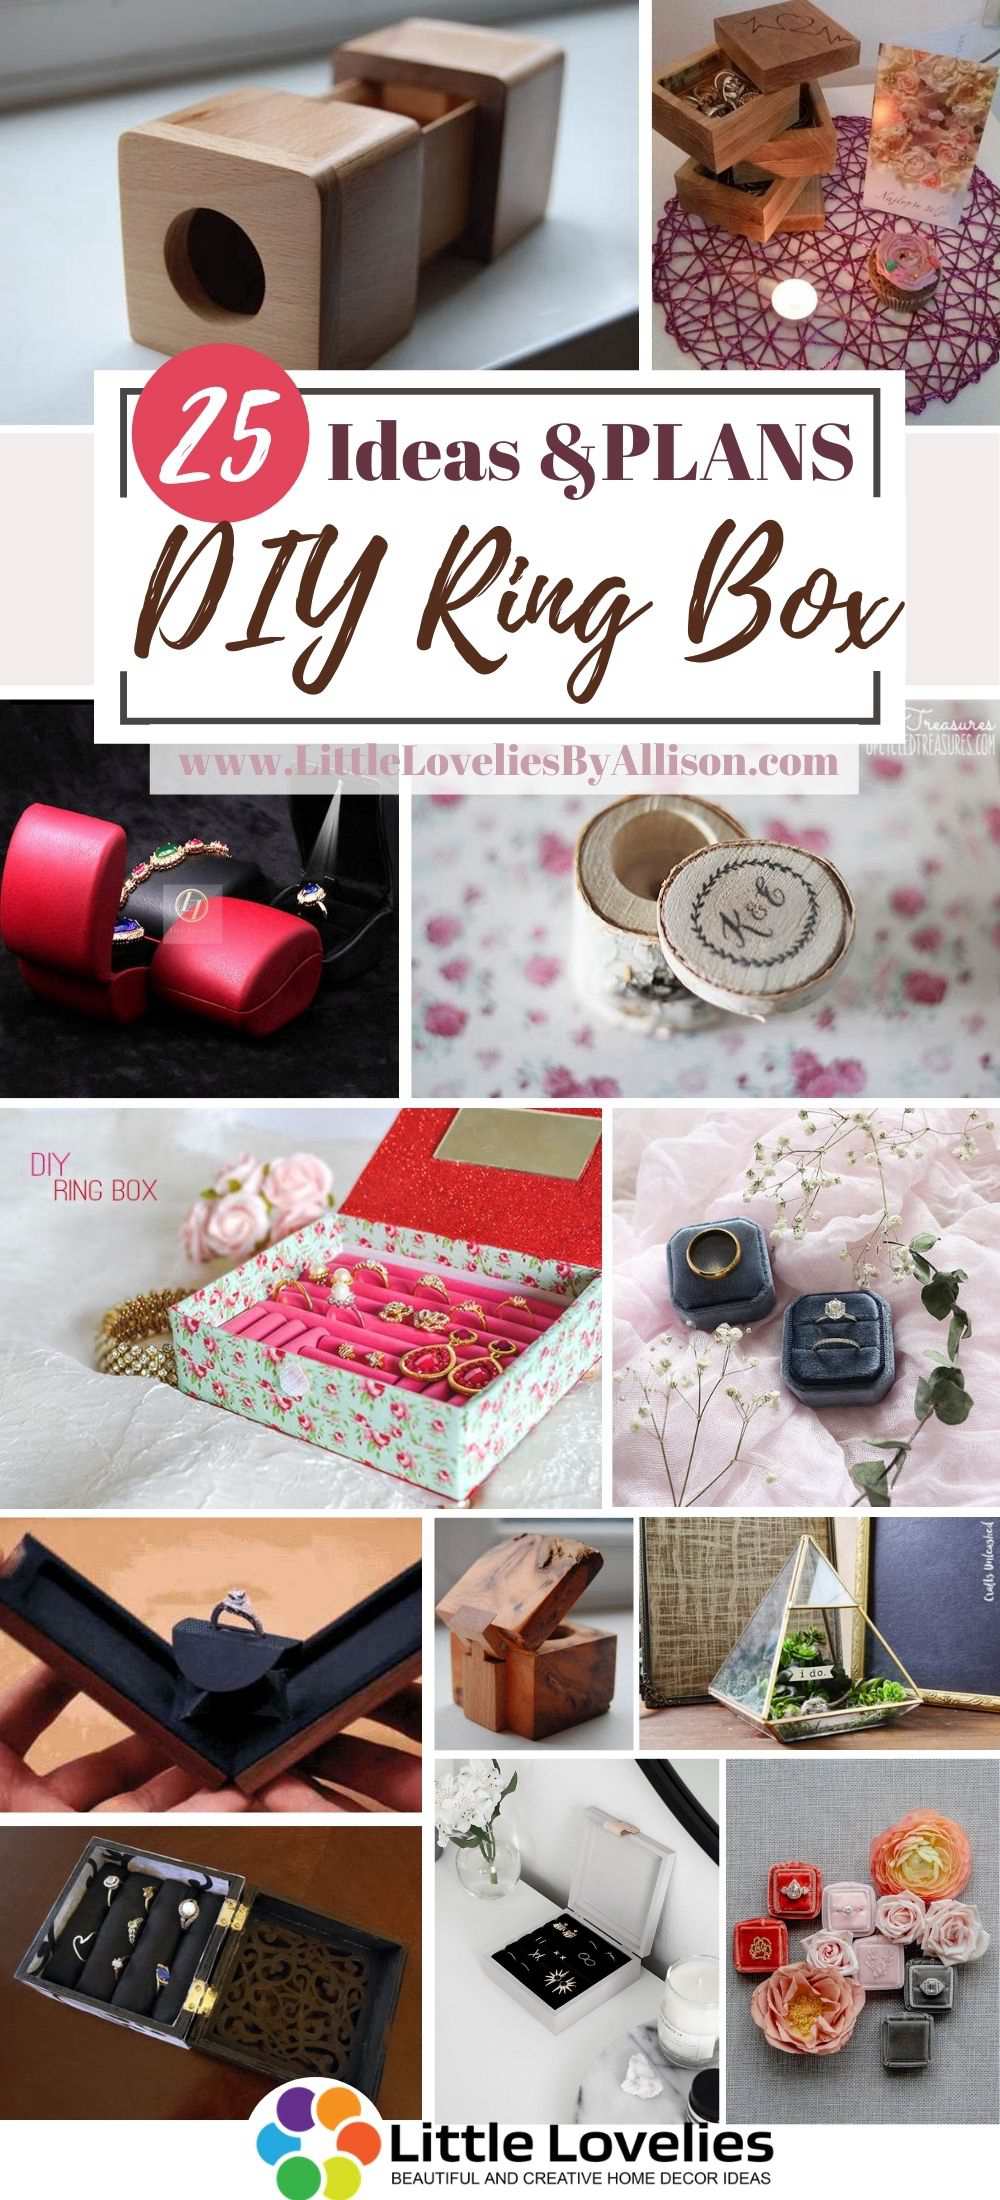 25 Diy Ring Box How To Make A Wedding Ring Box